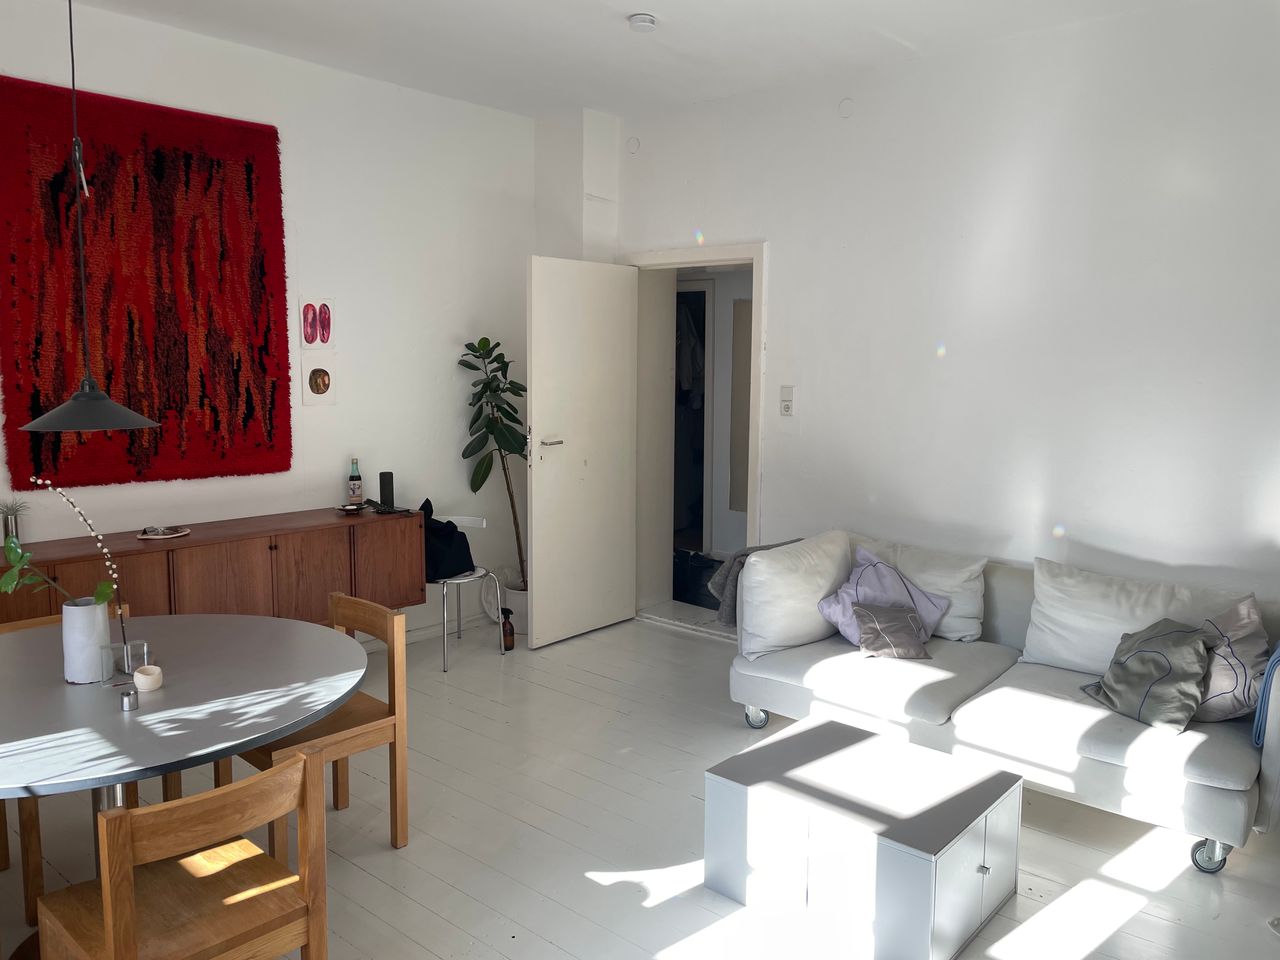 2 Room Apartment Studio in the Heart of Neukölln